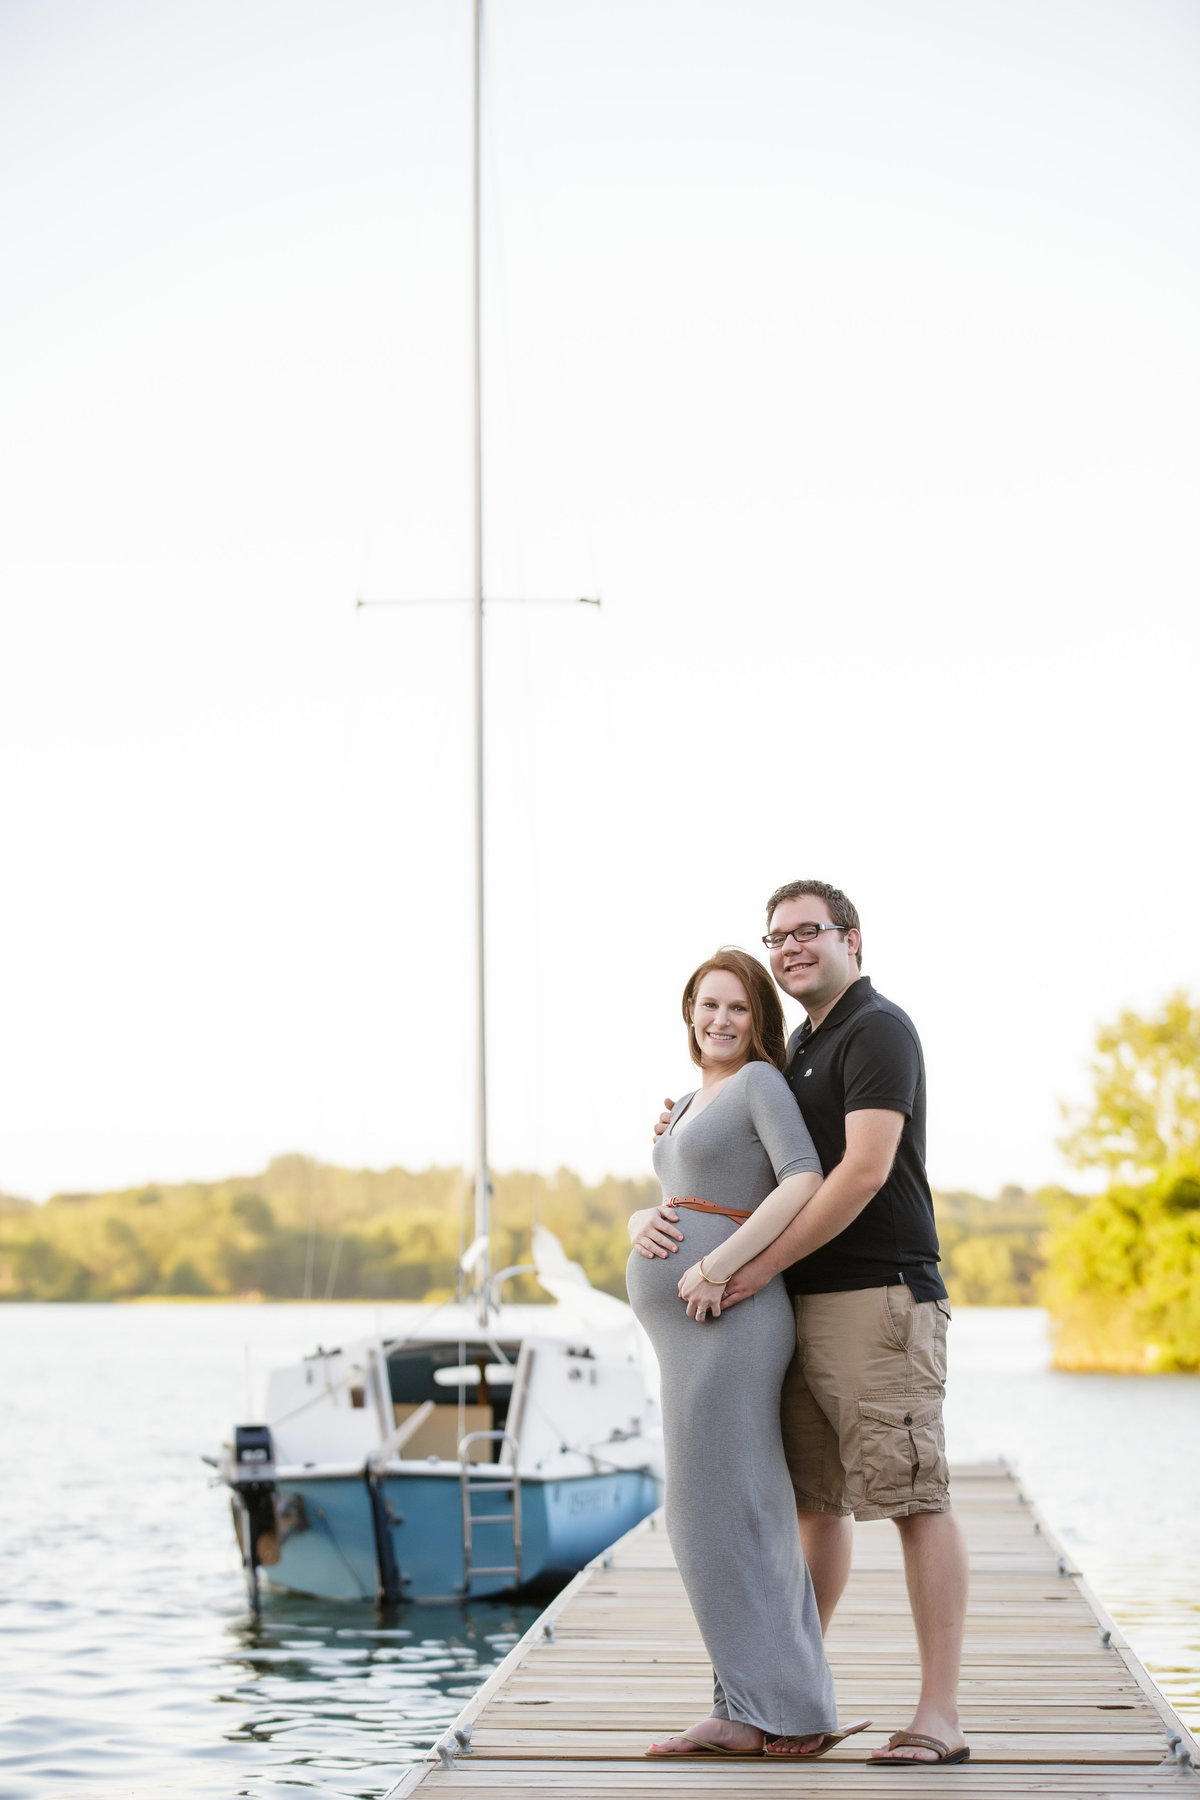 Maternity photos on a dock - Jen Madigan - Chicago Maternity Photographer